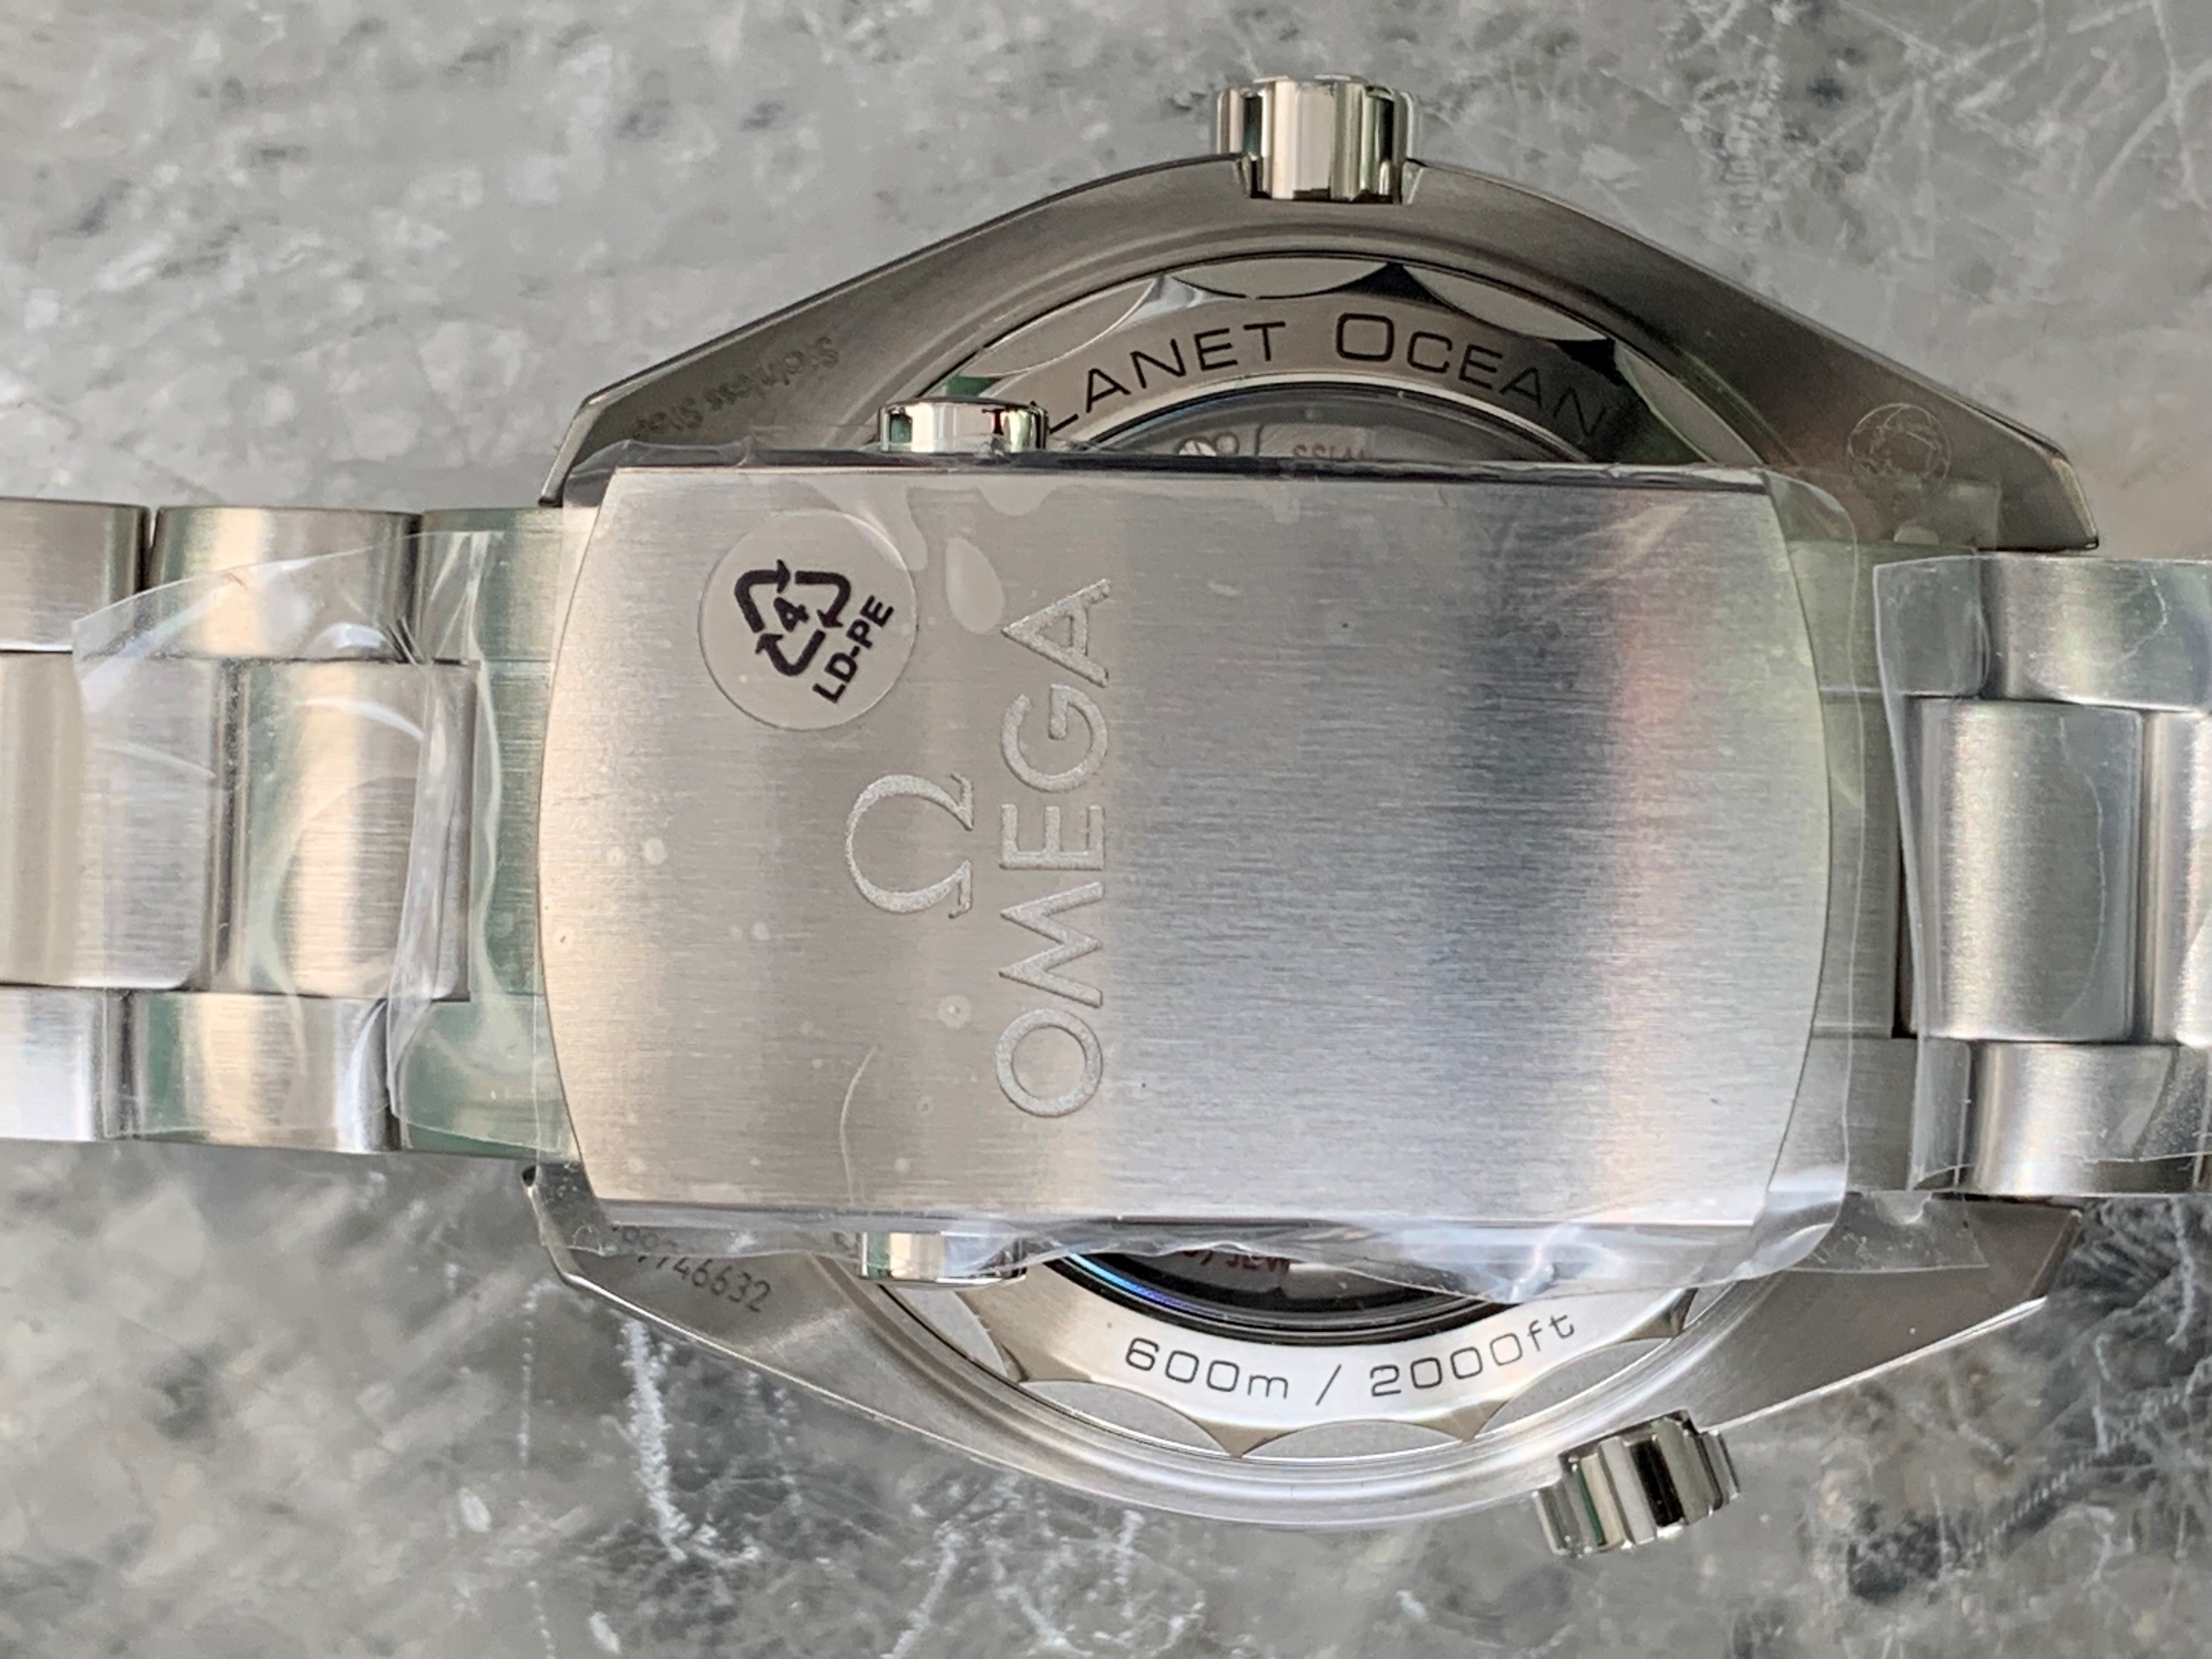 Omega Planet Ocean Ceramic, Luxury Dress Watch, Harley's Time